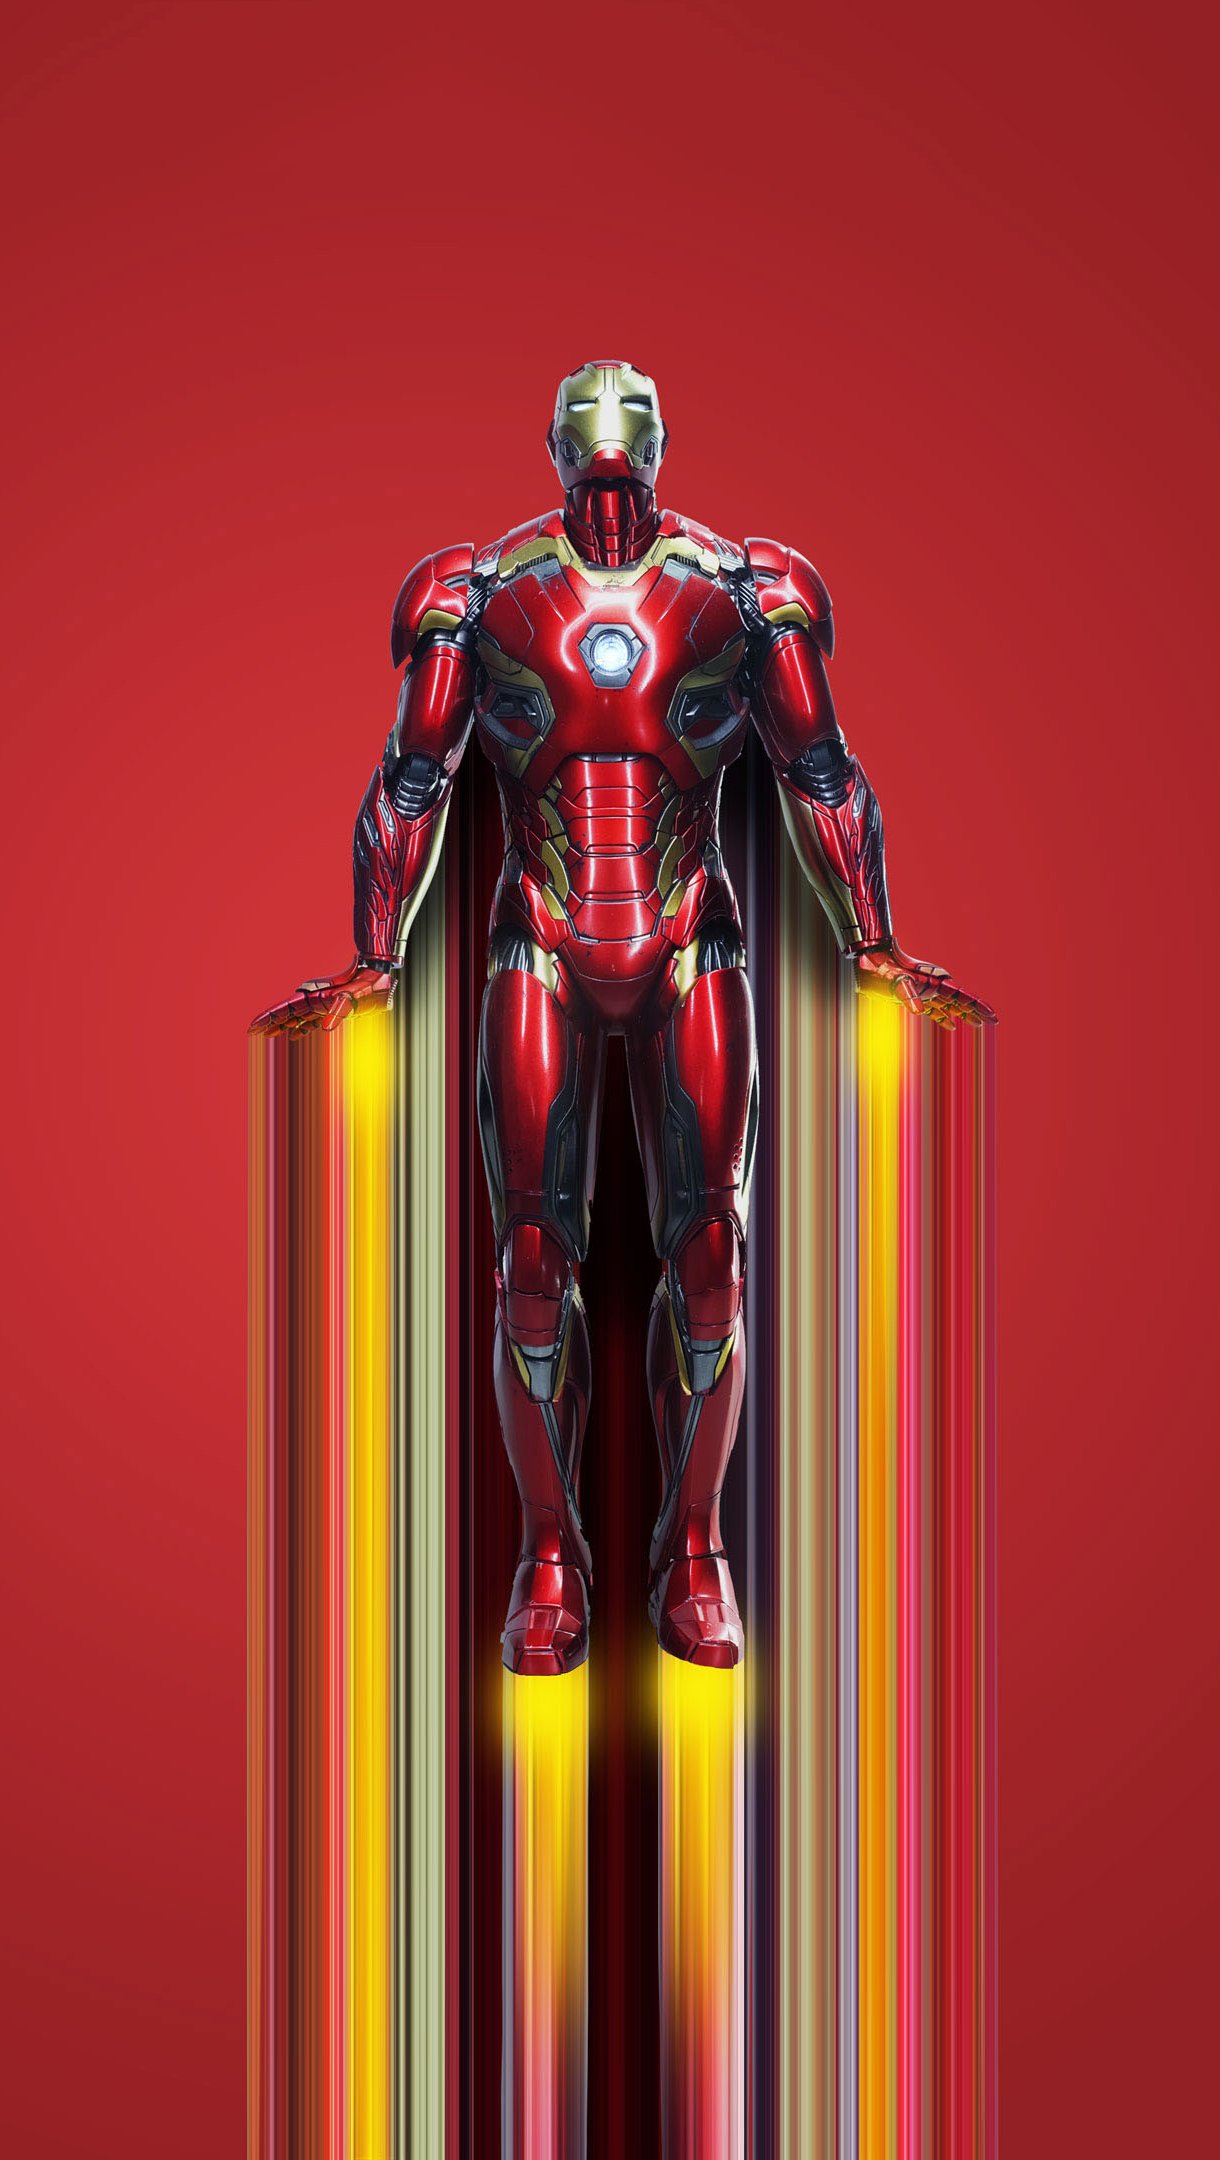 Iron man flying 2020 Wallpaper 4k Ultra HD ID:6392